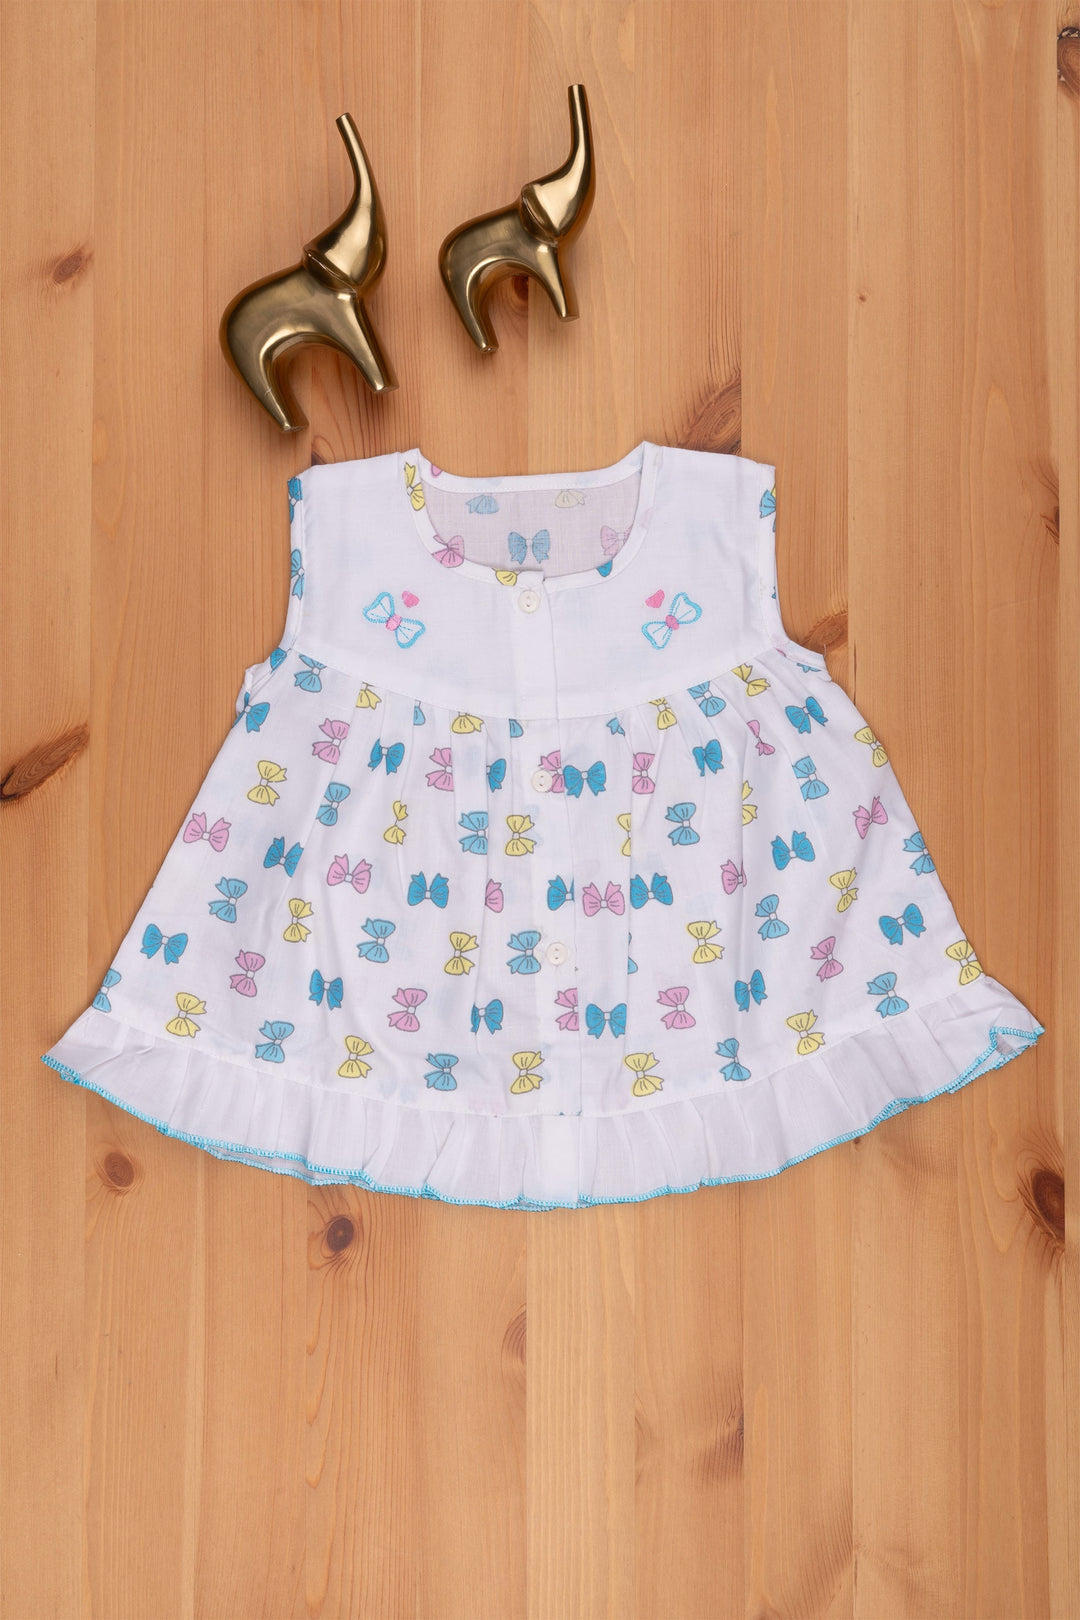 The Nesavu Baby Frock / Jhabla Attractive Bow Printed Dress in Pristine White for Infants Nesavu 12 (3M) / White BFJ445C-12 Fancy Baby Dress Online | Printed Fancy Frock For Baby Girl | The Nesavu